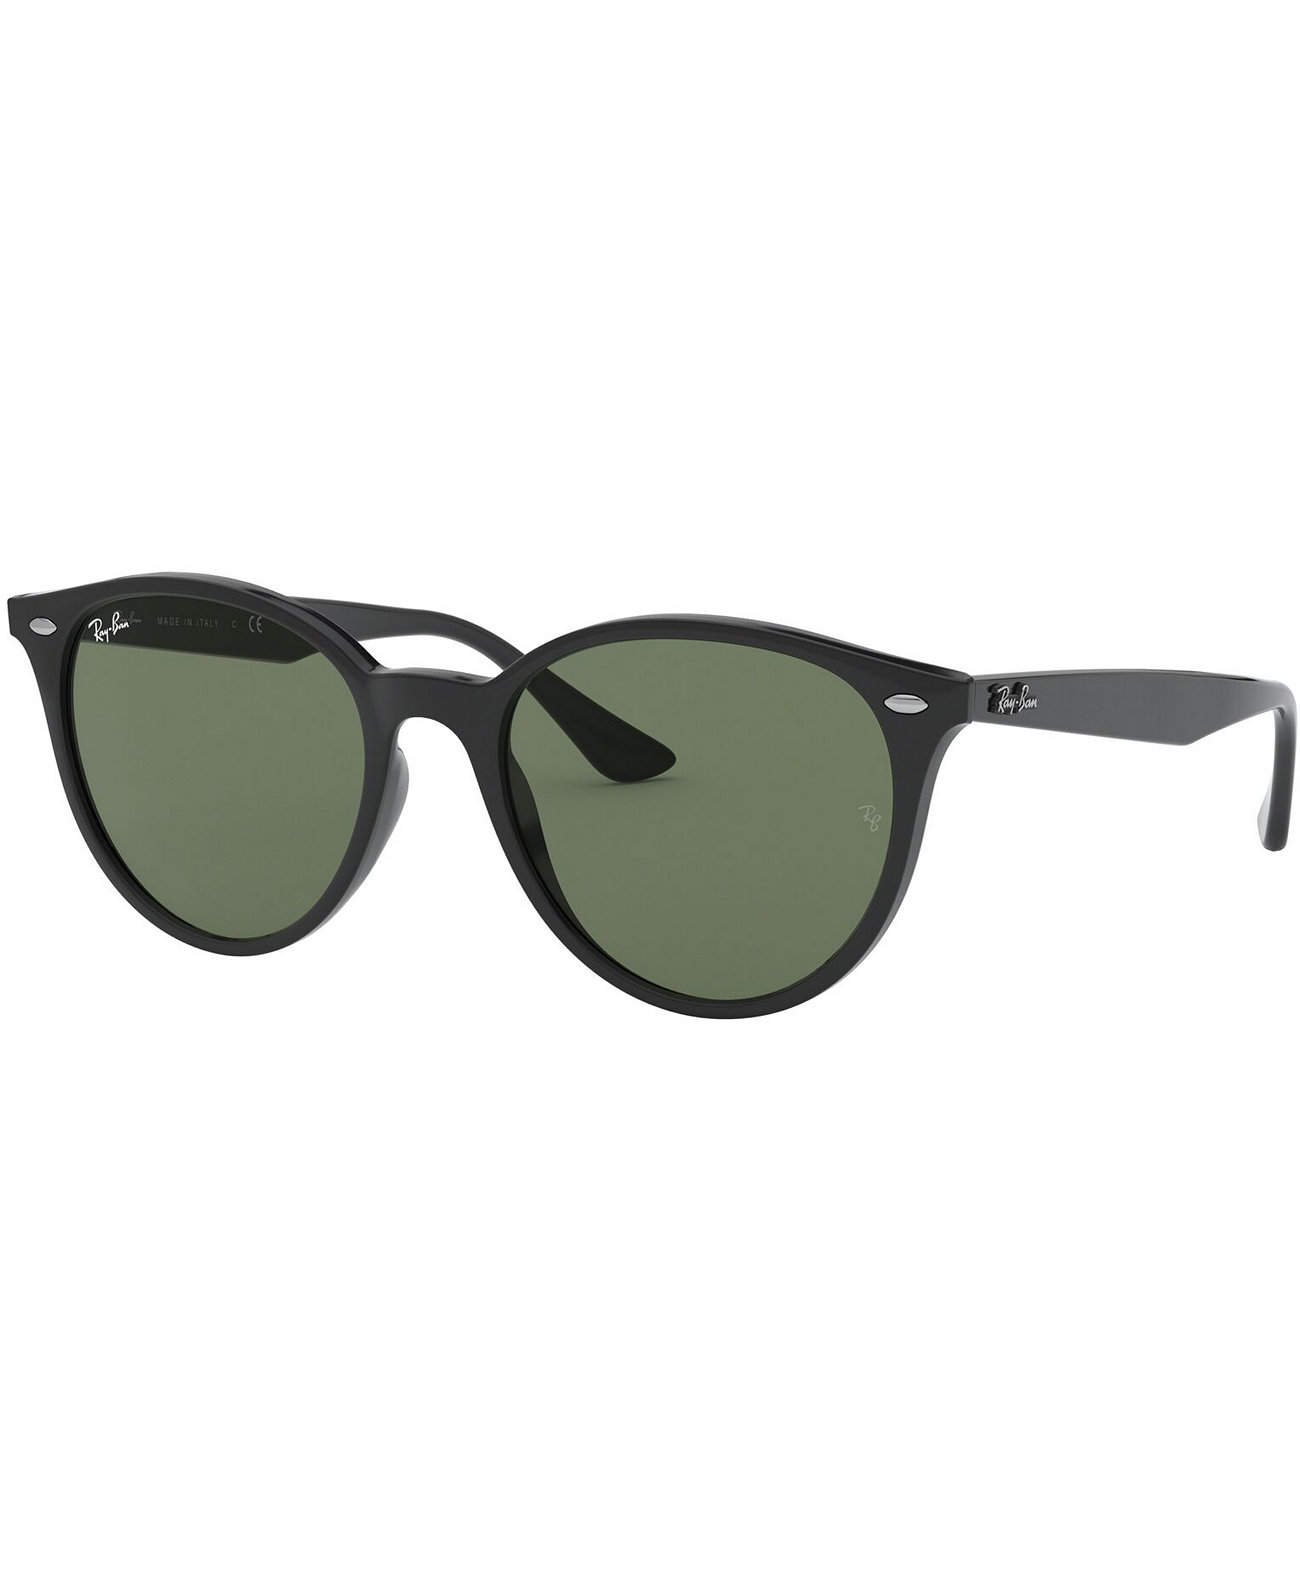 Солнцезащитные очки, RB4305 53 Ray-Ban